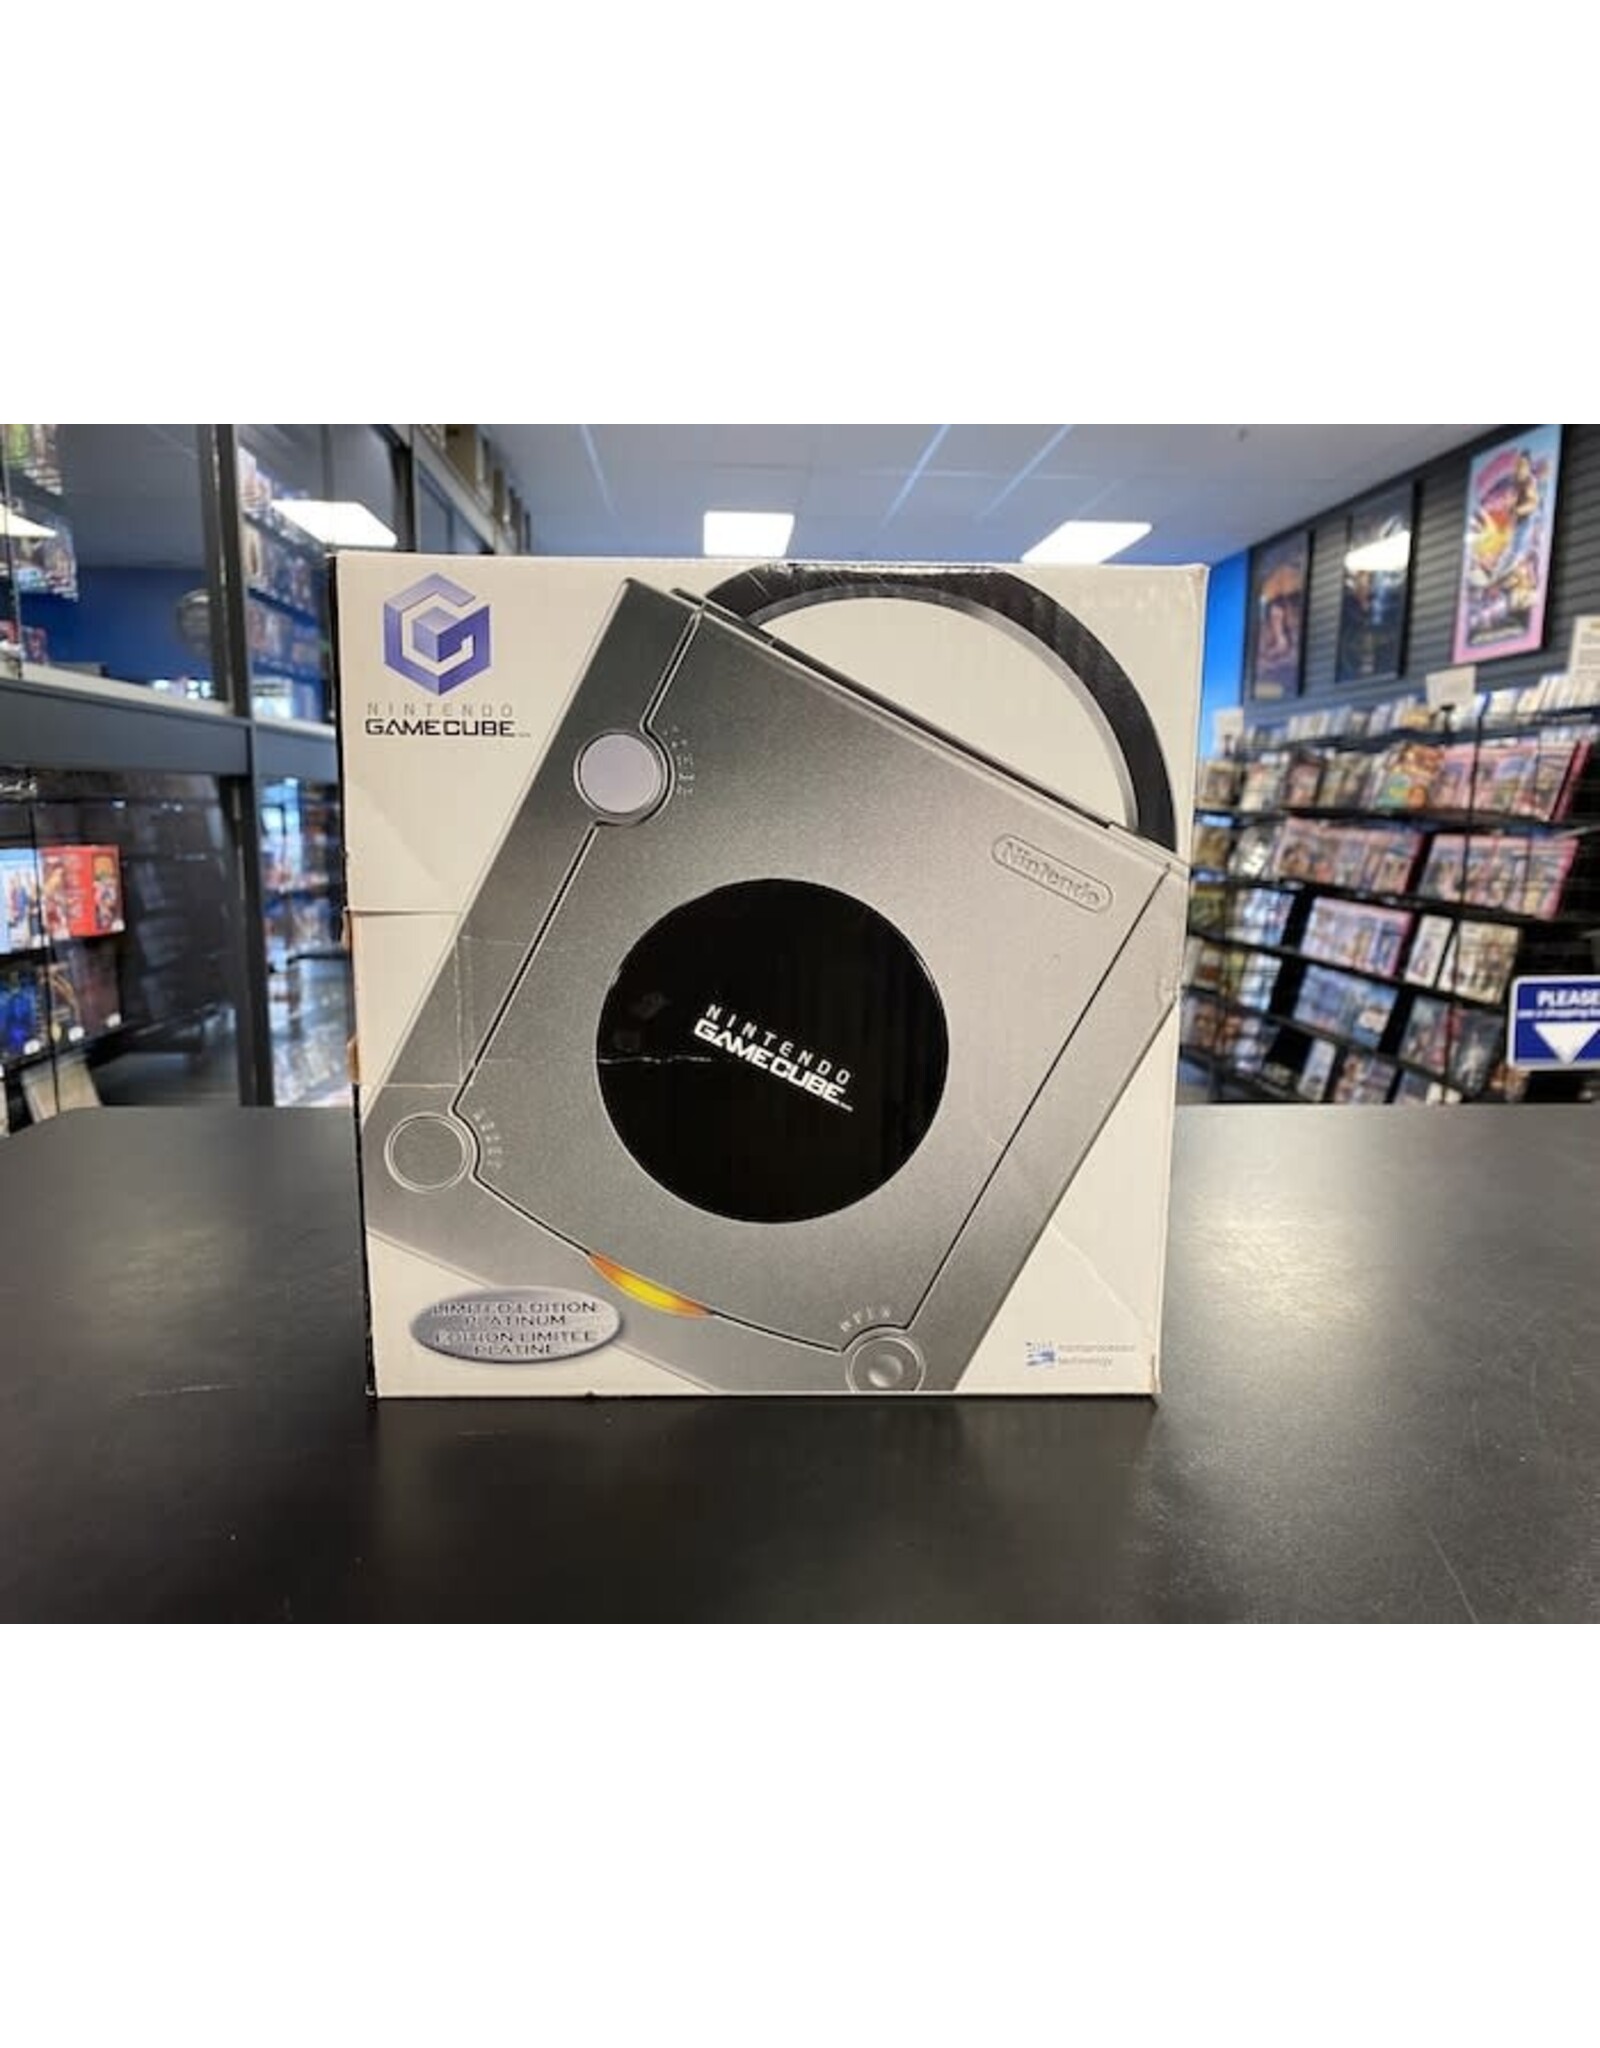 Gamecube Nintendo GameCube Digital AV Out Console Platinum (CiB, Used, Damaged Box, Yellowed Controller Ports, Missing Cardboard Tray)